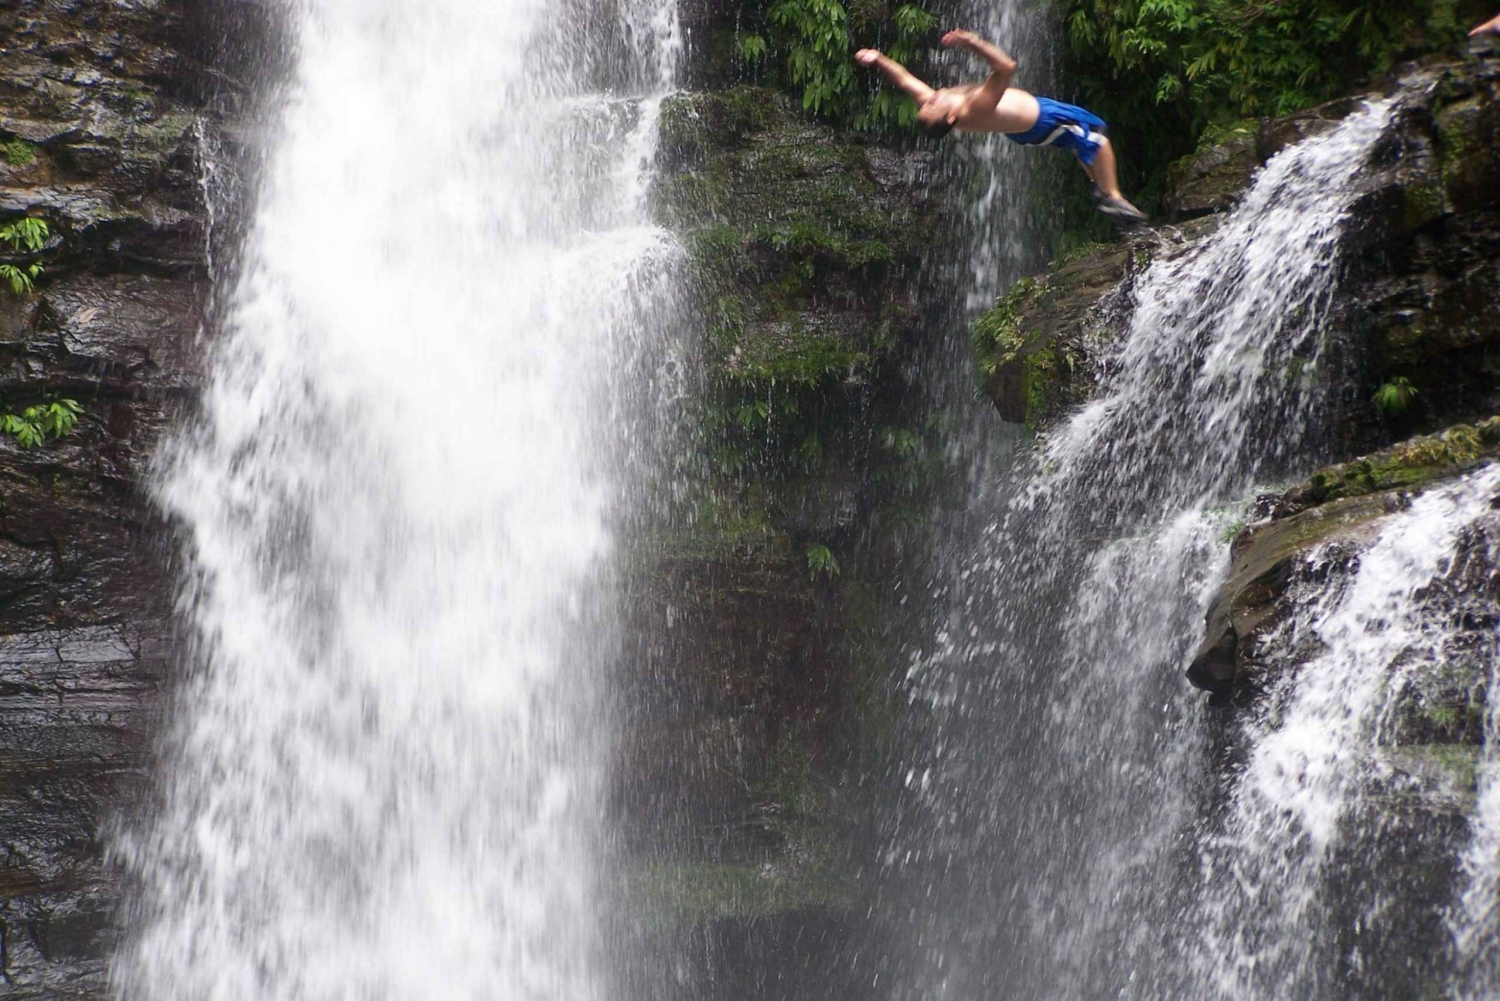 The Extreme Adventurer Waterfall Tour